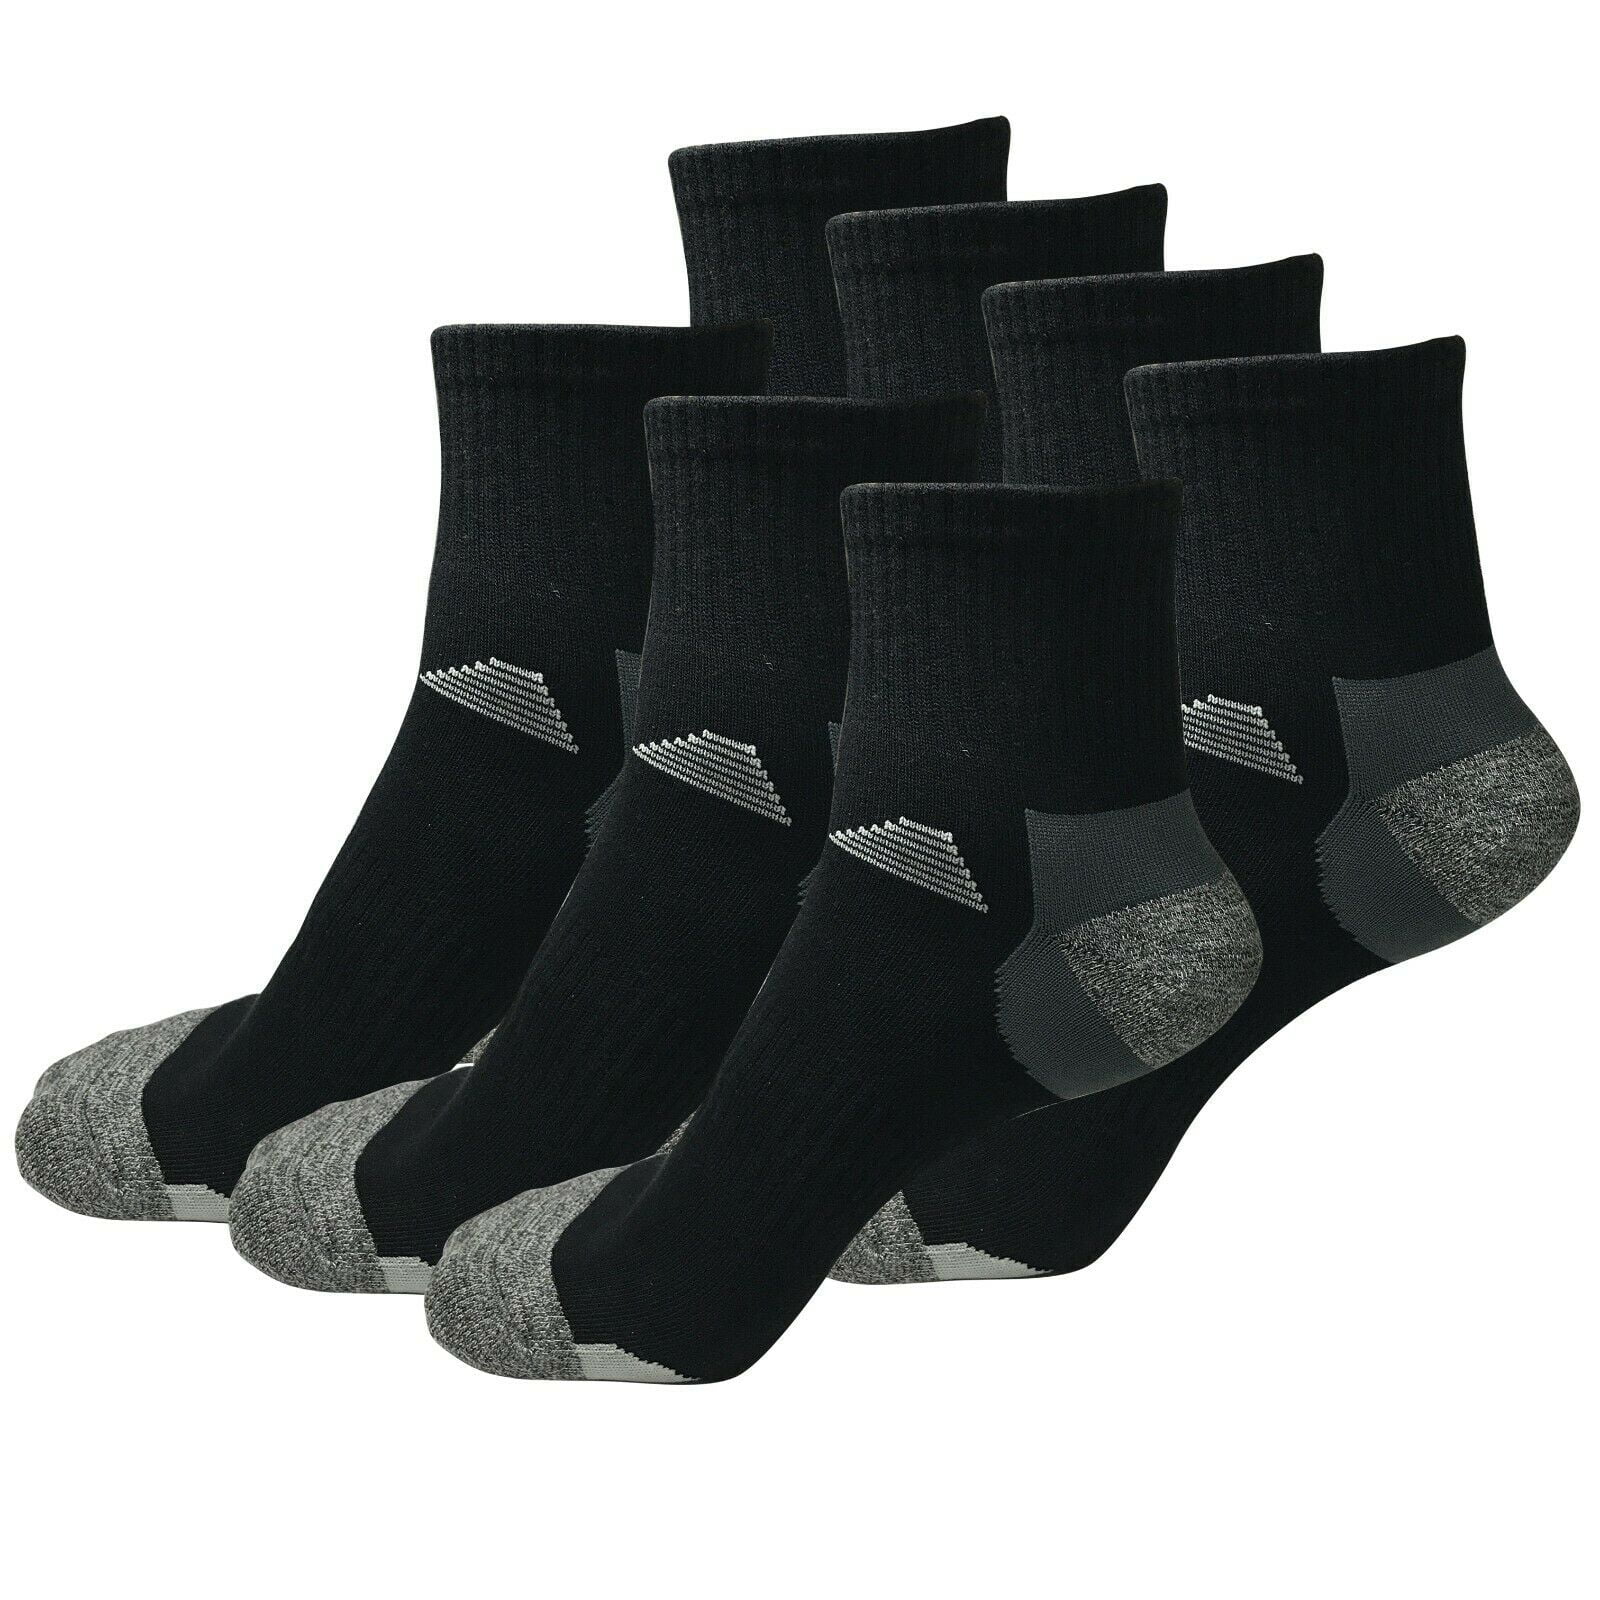 Big foot socks Mens black Luxury 100% cotton size 11-14 XL feet 3 Pairs 